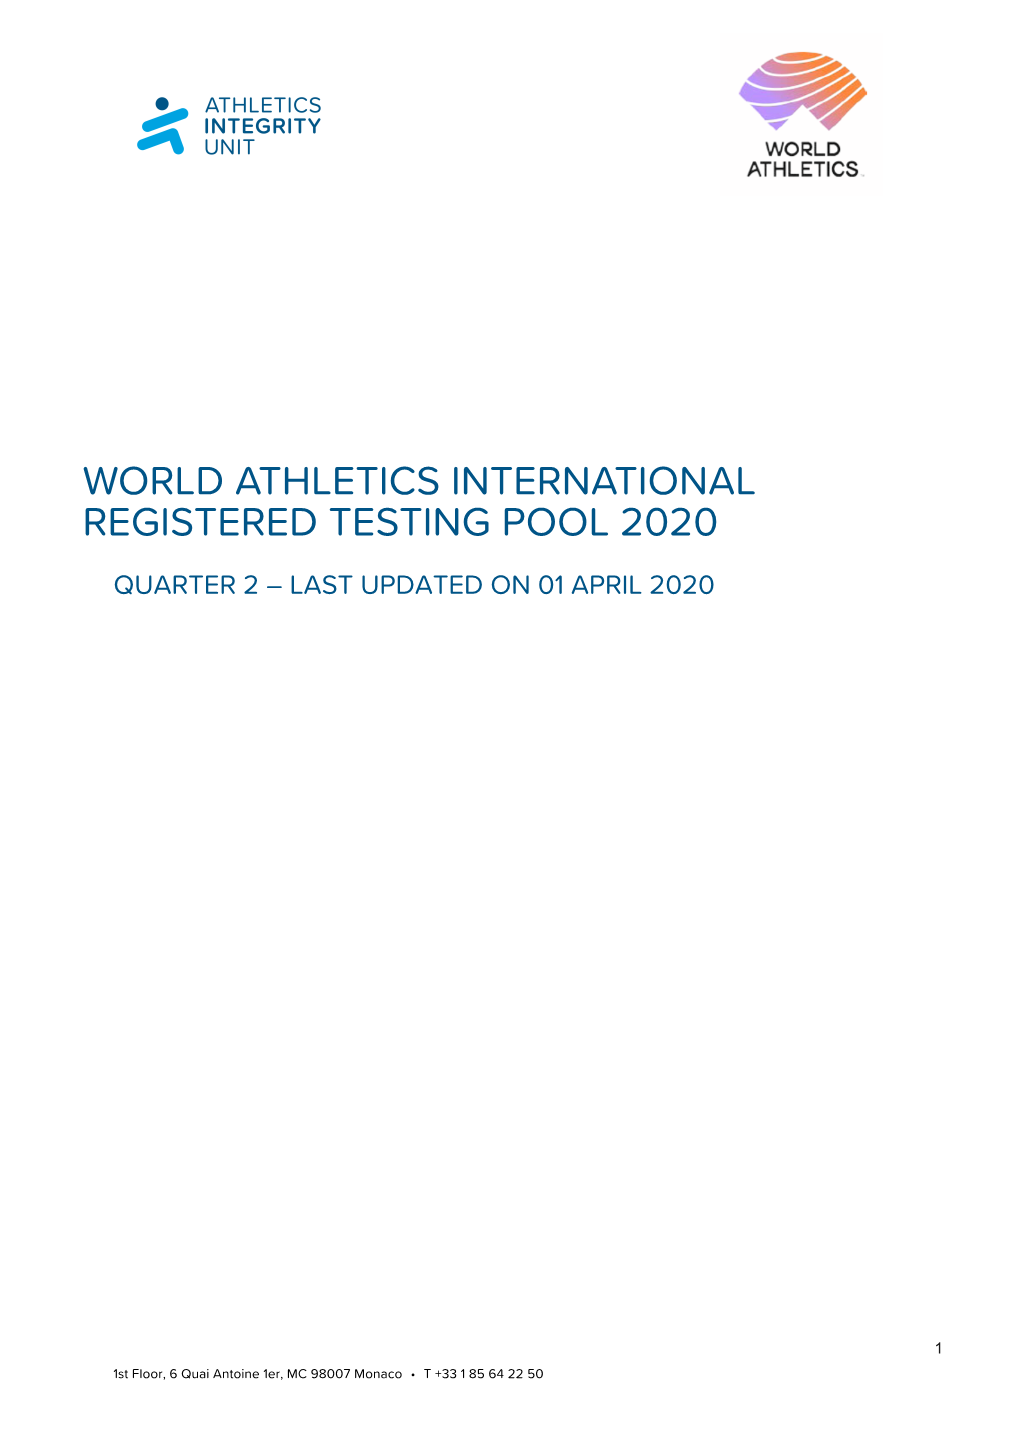 World Athletics International Registered Testing Pool 2020